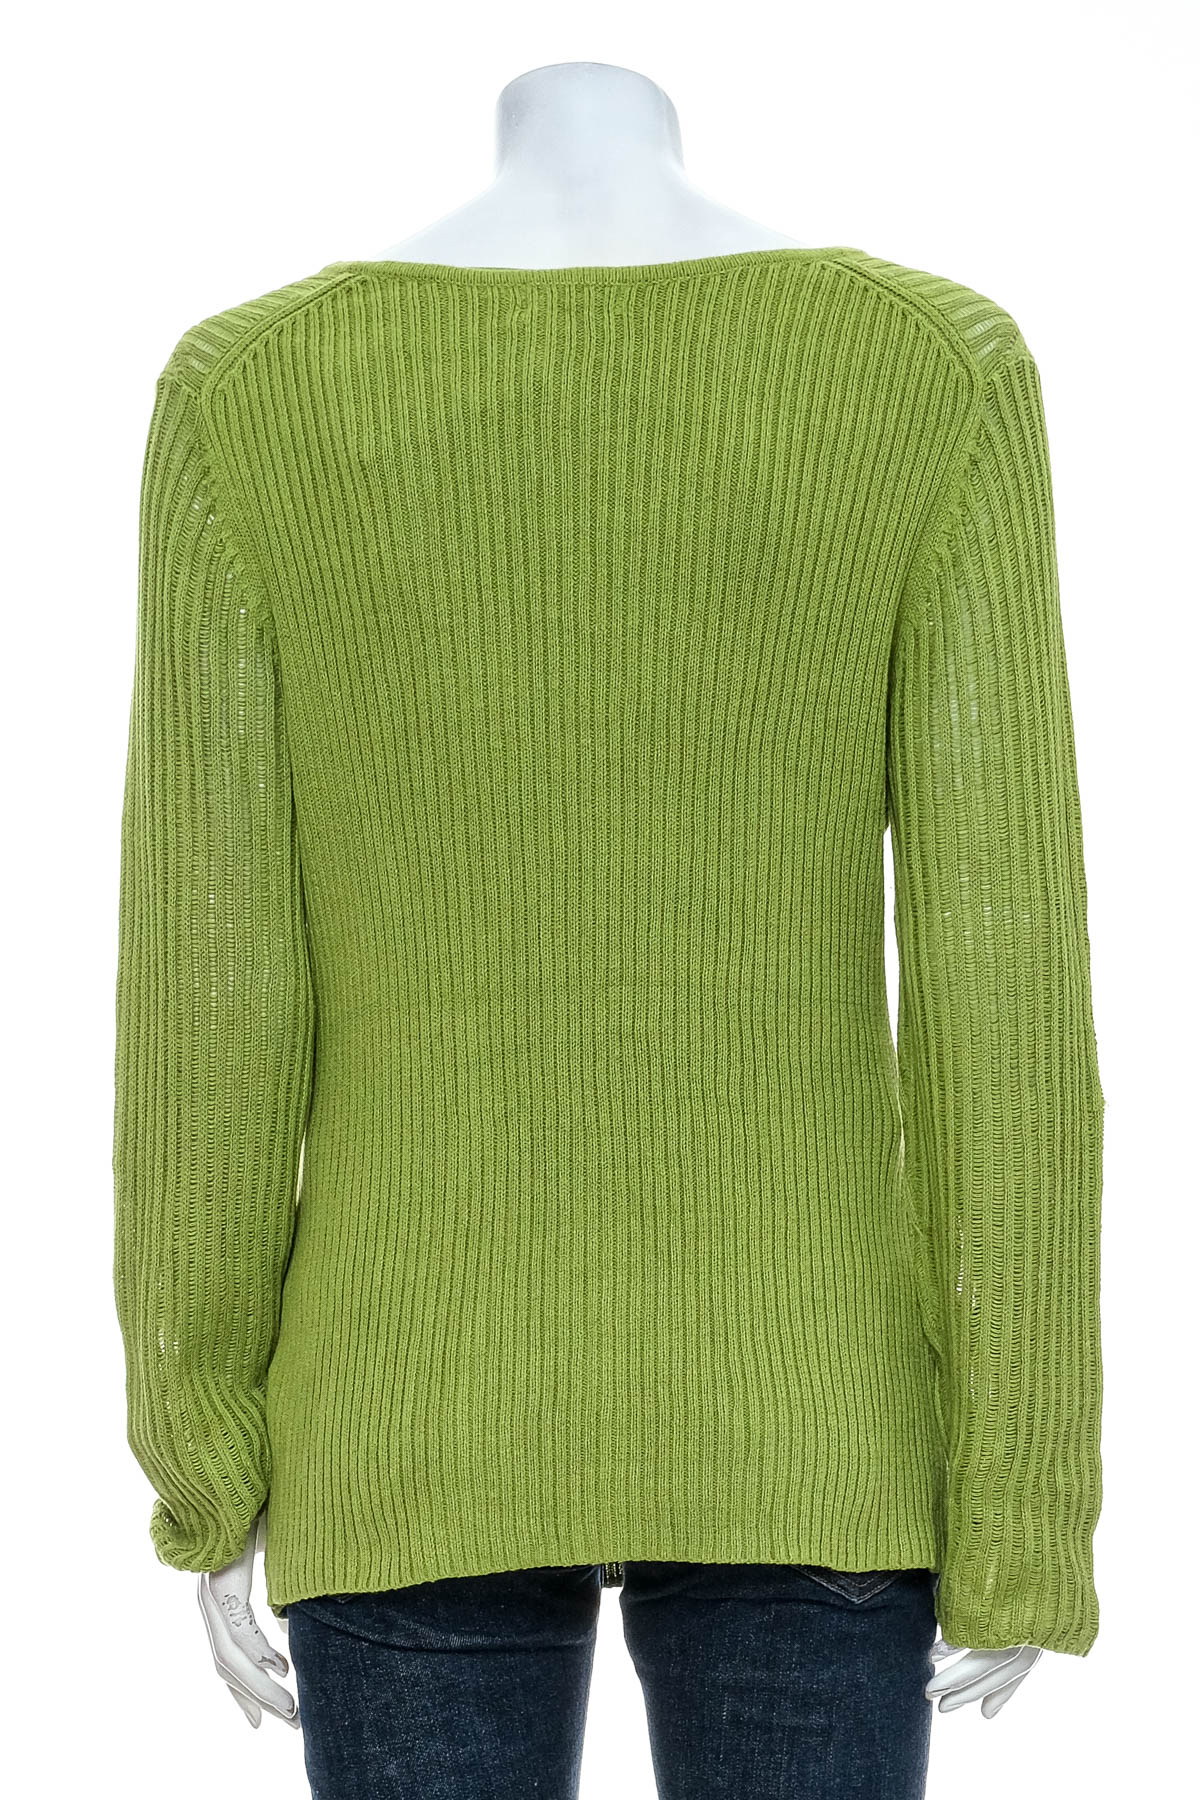 Women's sweater - JESSICA - 1